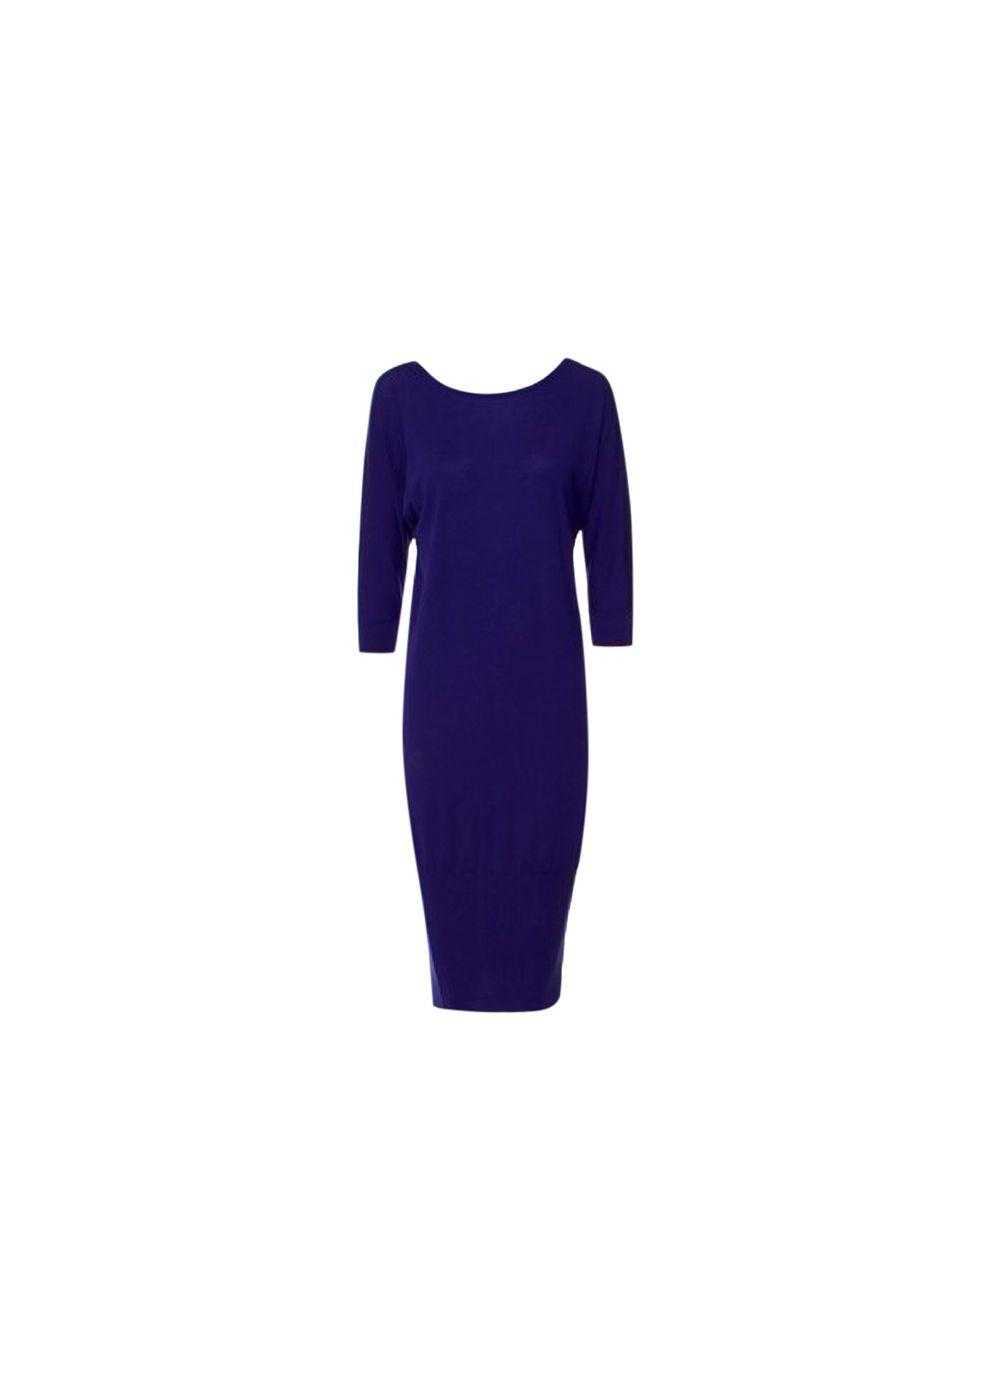 Emilio Pucci Purple wool fine knit jumper dress - image 1